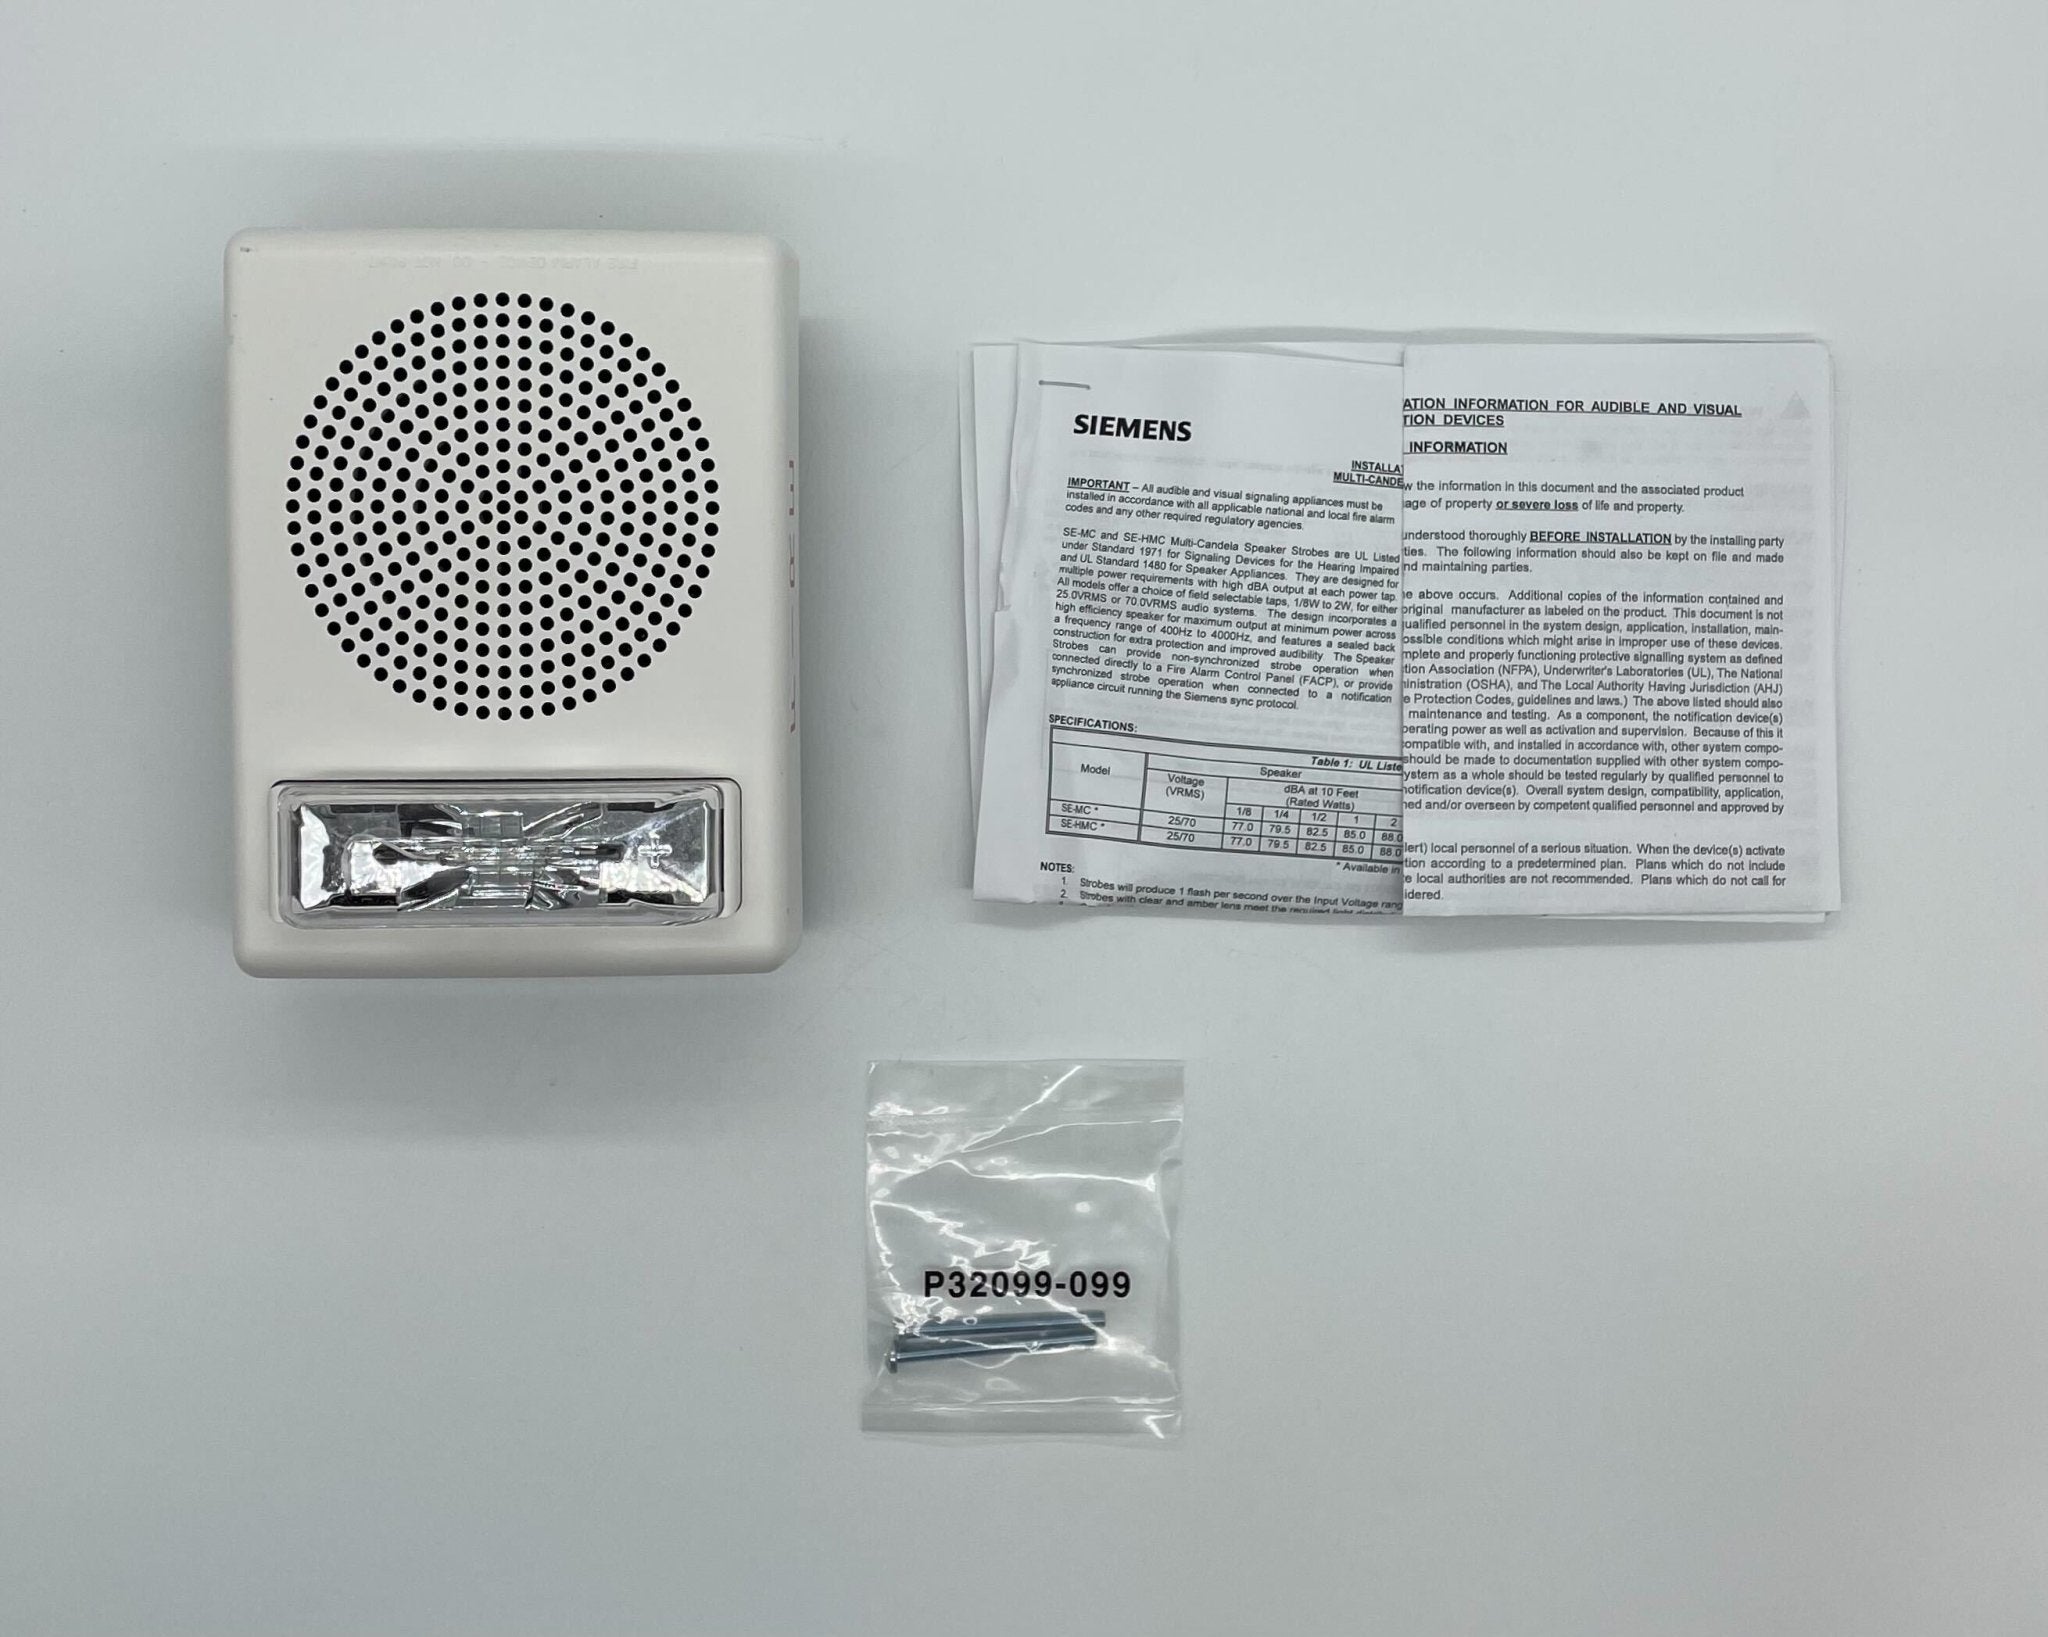 Siemens SE-HMC-W Multi-Candela White Speaker - The Fire Alarm Supplier